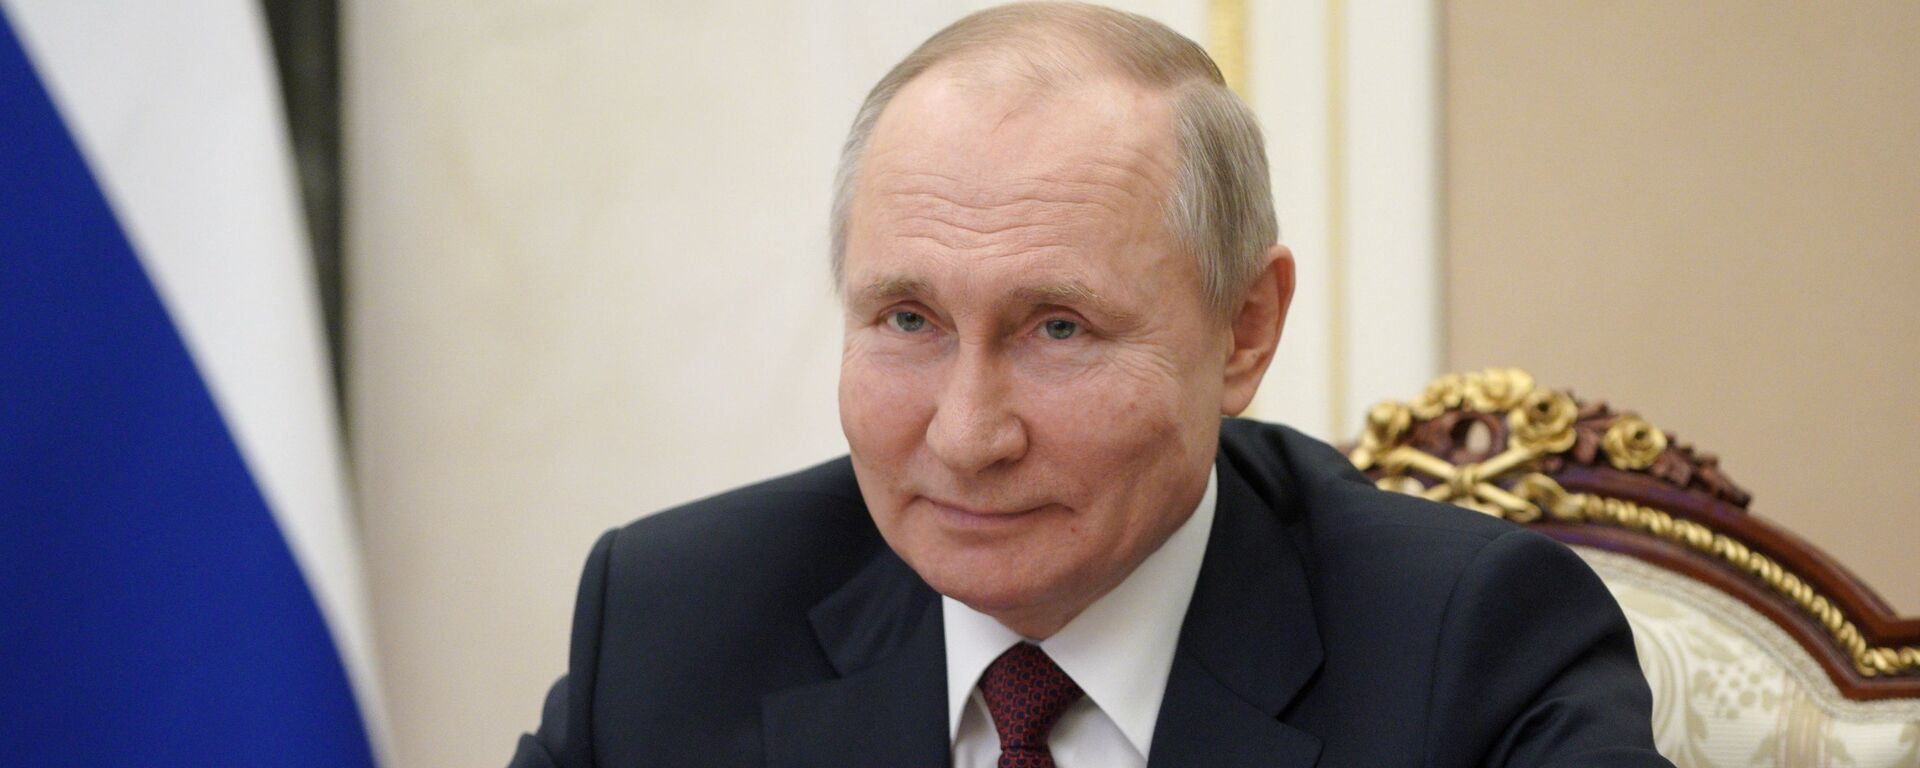 Tổng thống Nga Vladimir Putin - Sputnik Việt Nam, 1920, 18.03.2021